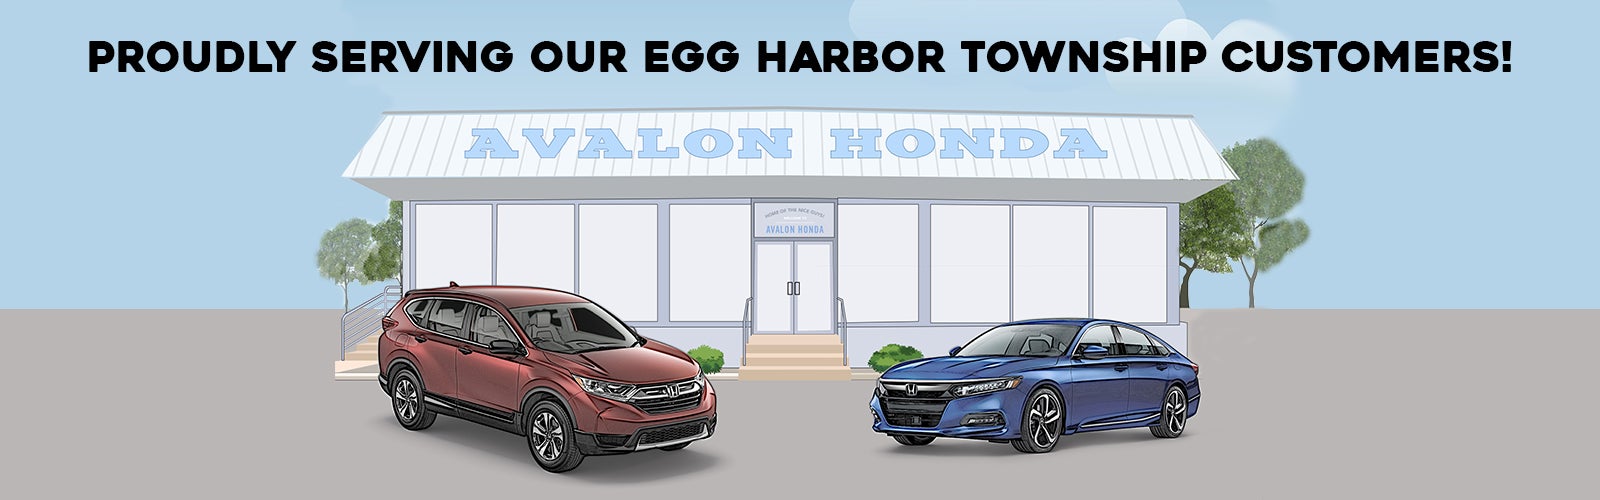 Honda dealership near Egg Harbor Township